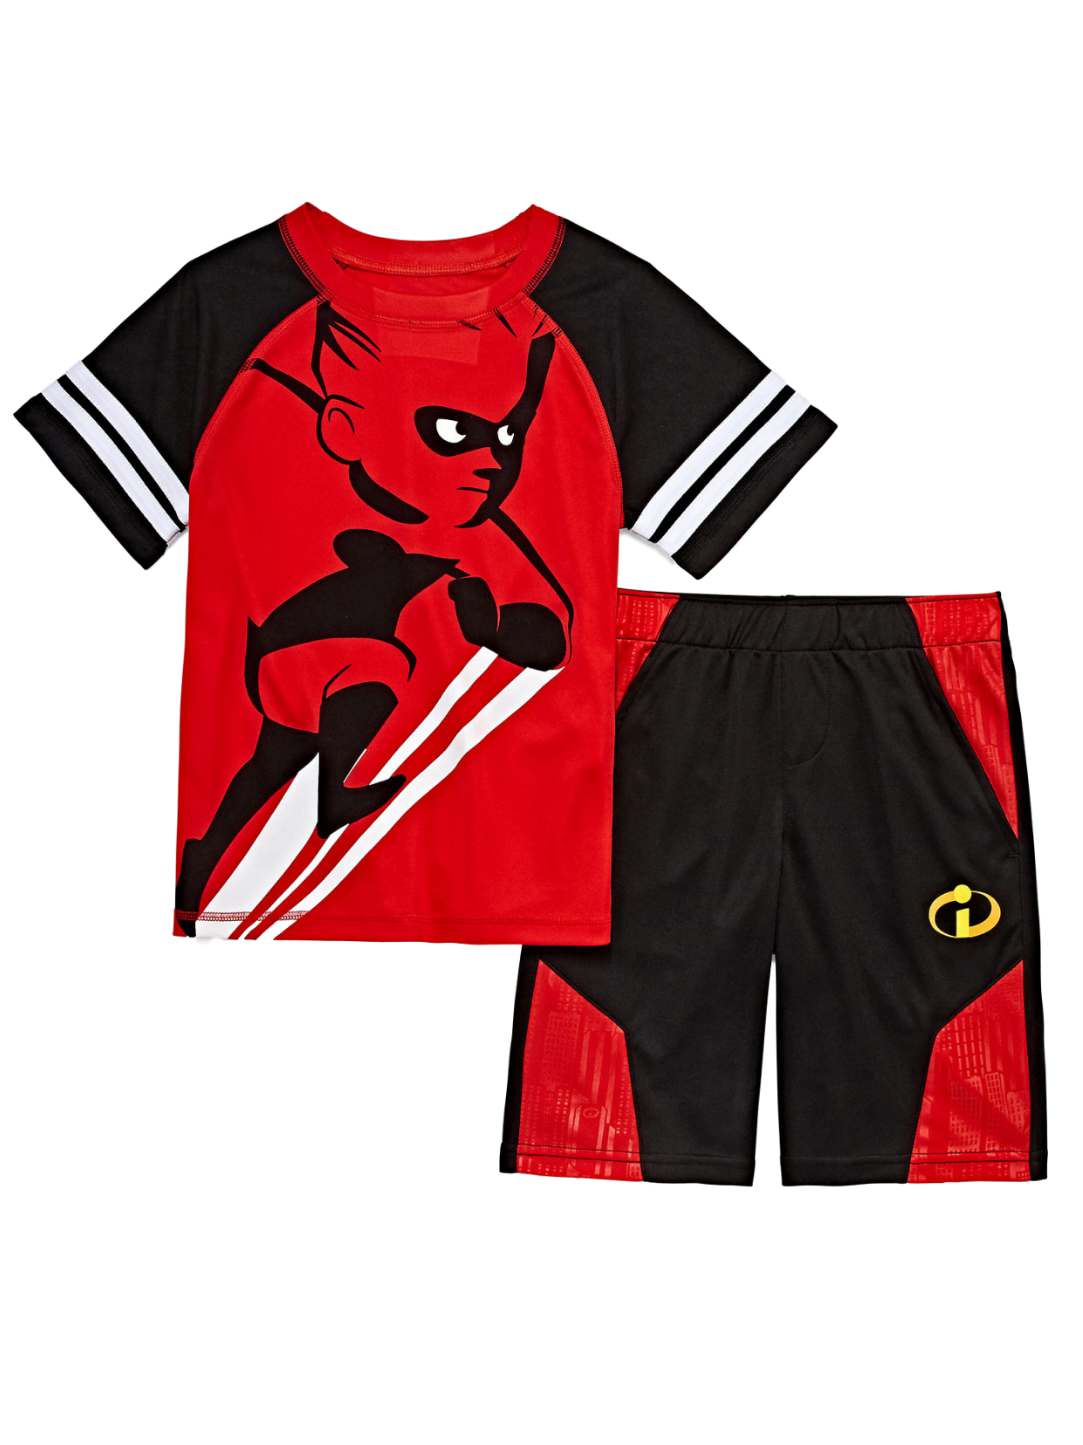 Disney Incredibles Toddler & Boys Red Dash Outfit Tee Shirt & Shorts Set